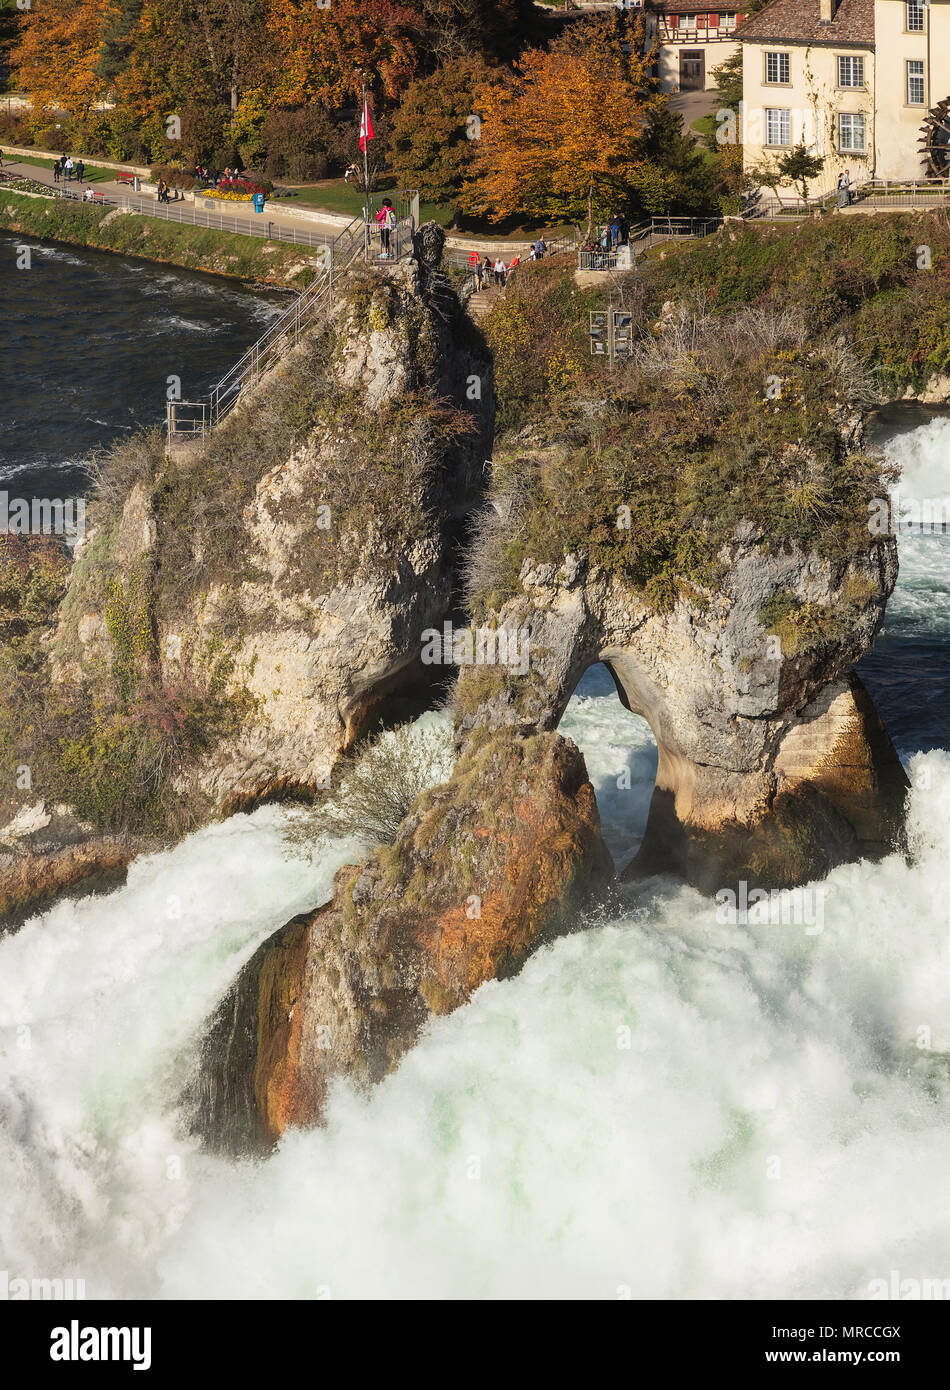 Laufen, Switzerland - 18 October, 2017: the Rhine Falls, view from the Laufen castle. The Rhine Falls is the largest waterfall in Europe, located on t Stock Photo